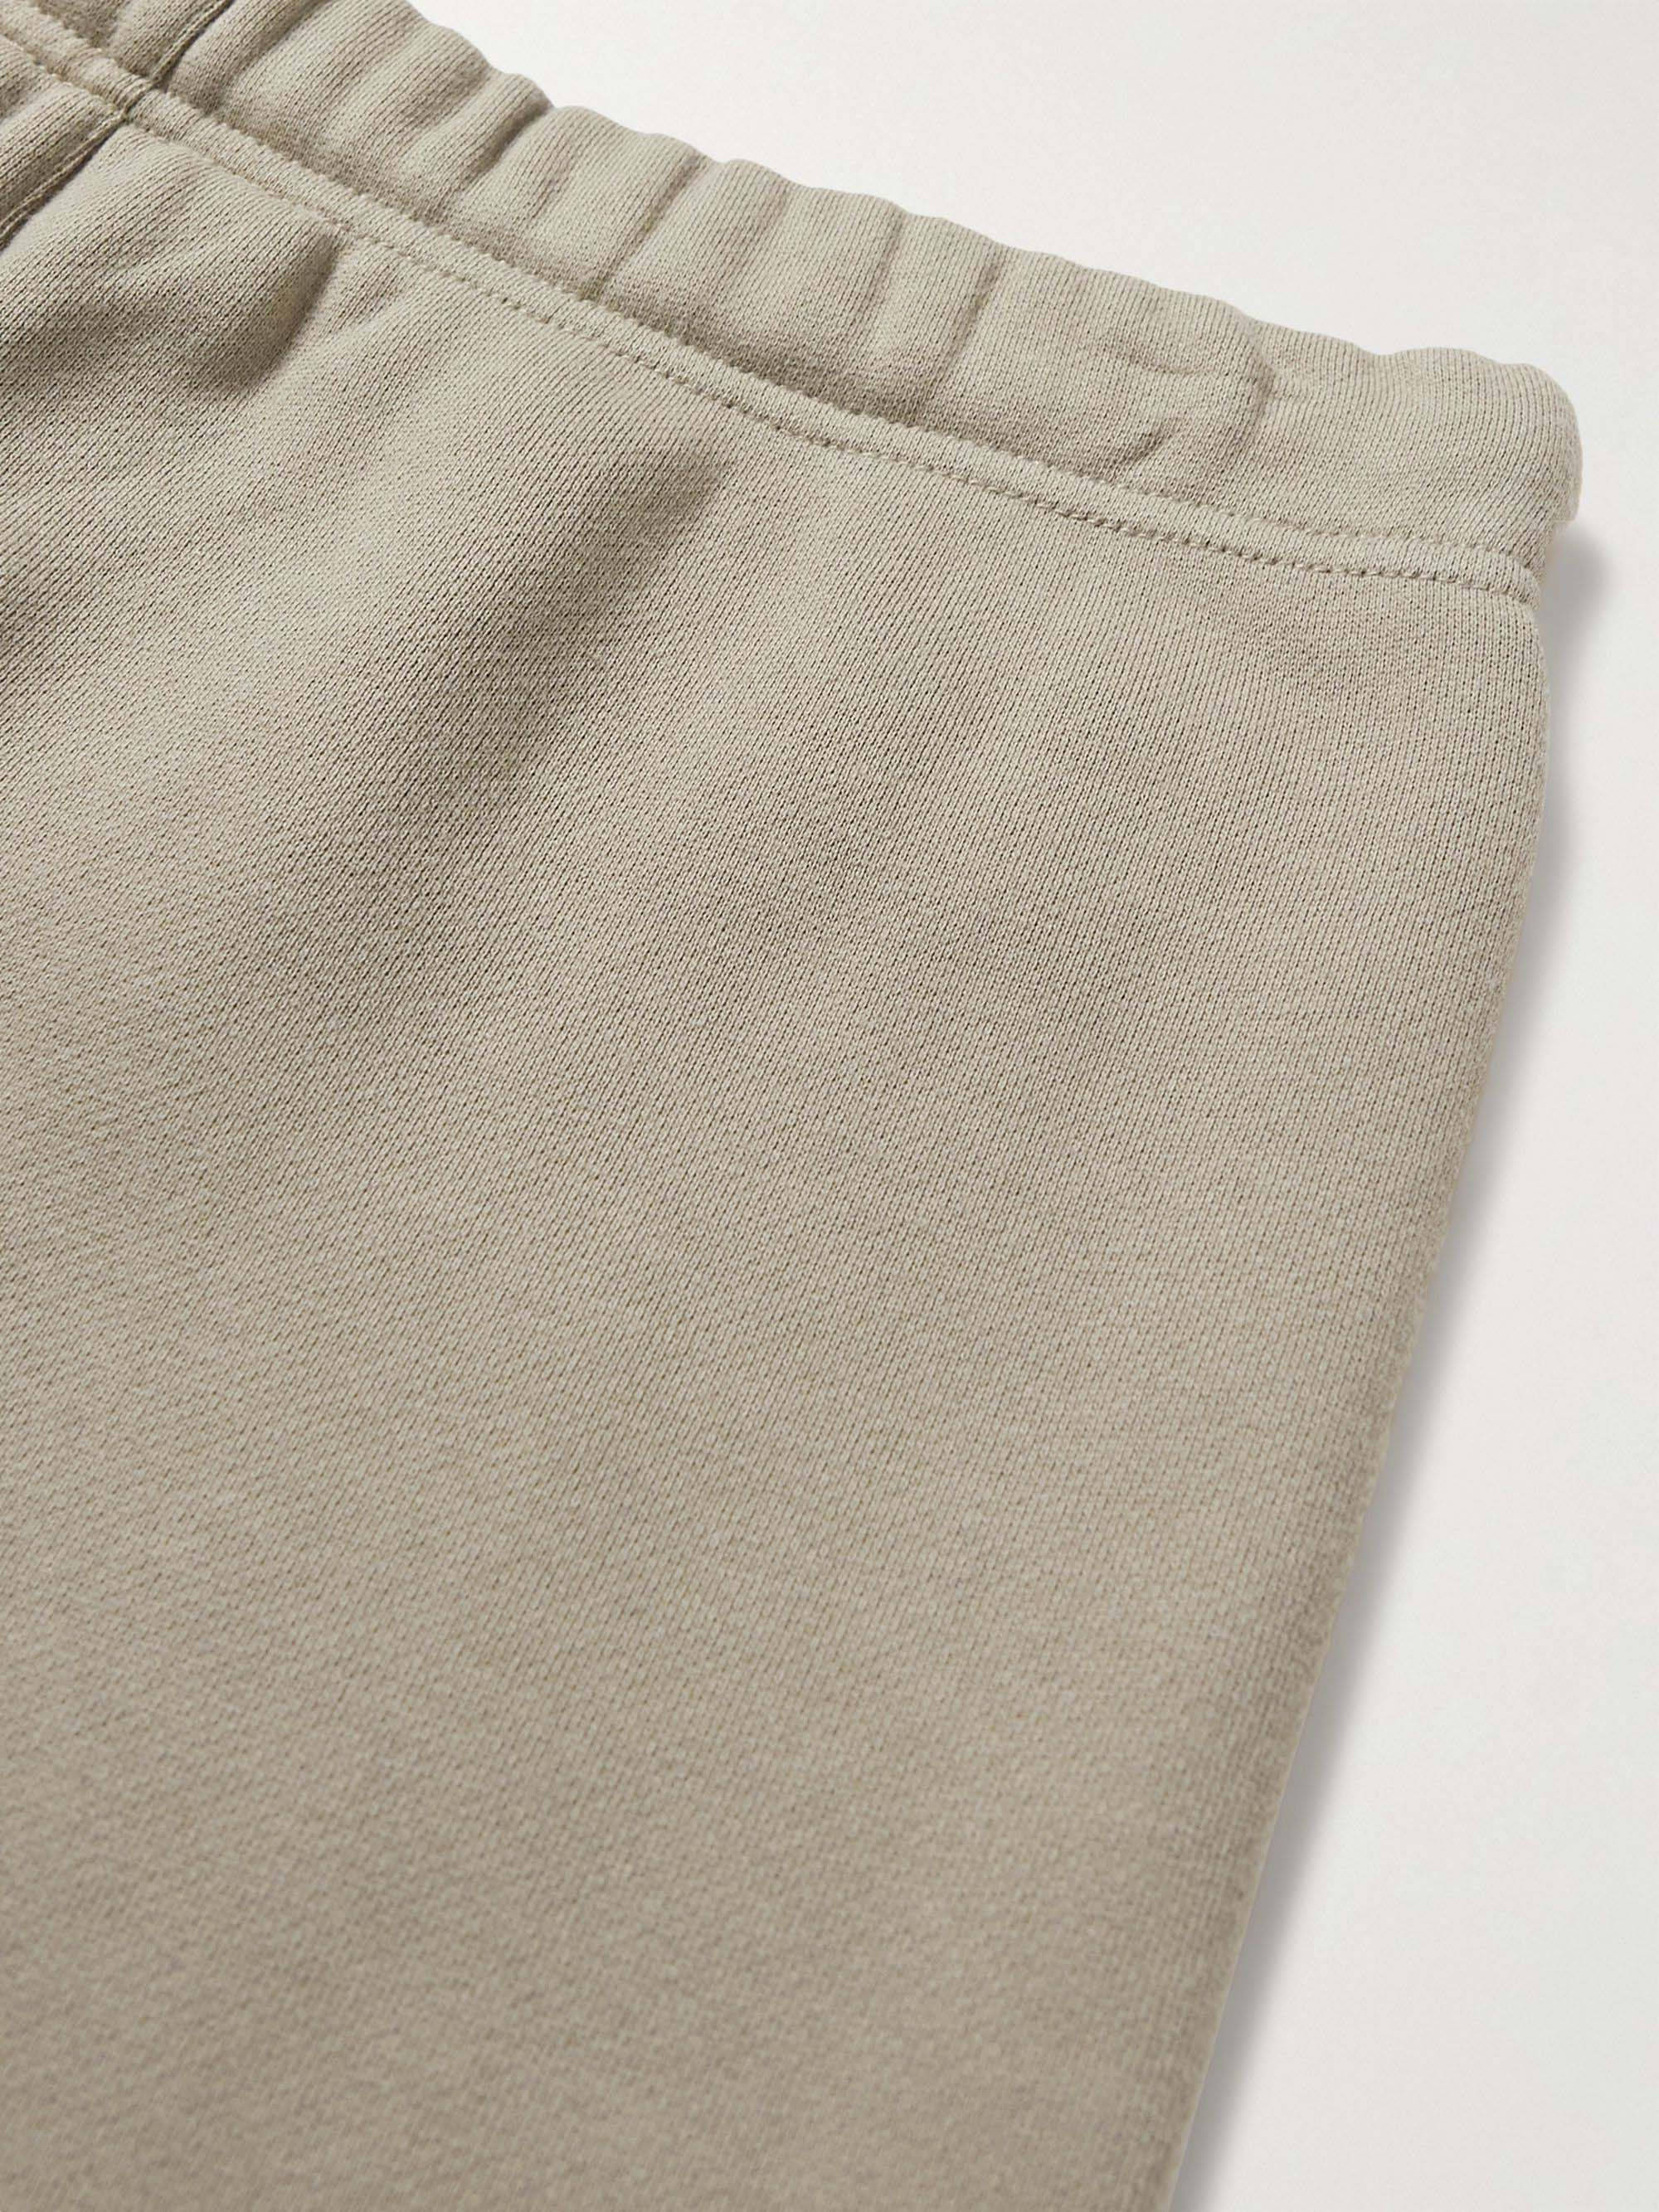 Fear Of God Straight-leg Logo-flocked Cotton-blend Jersey Sweatpants in  Black for Men